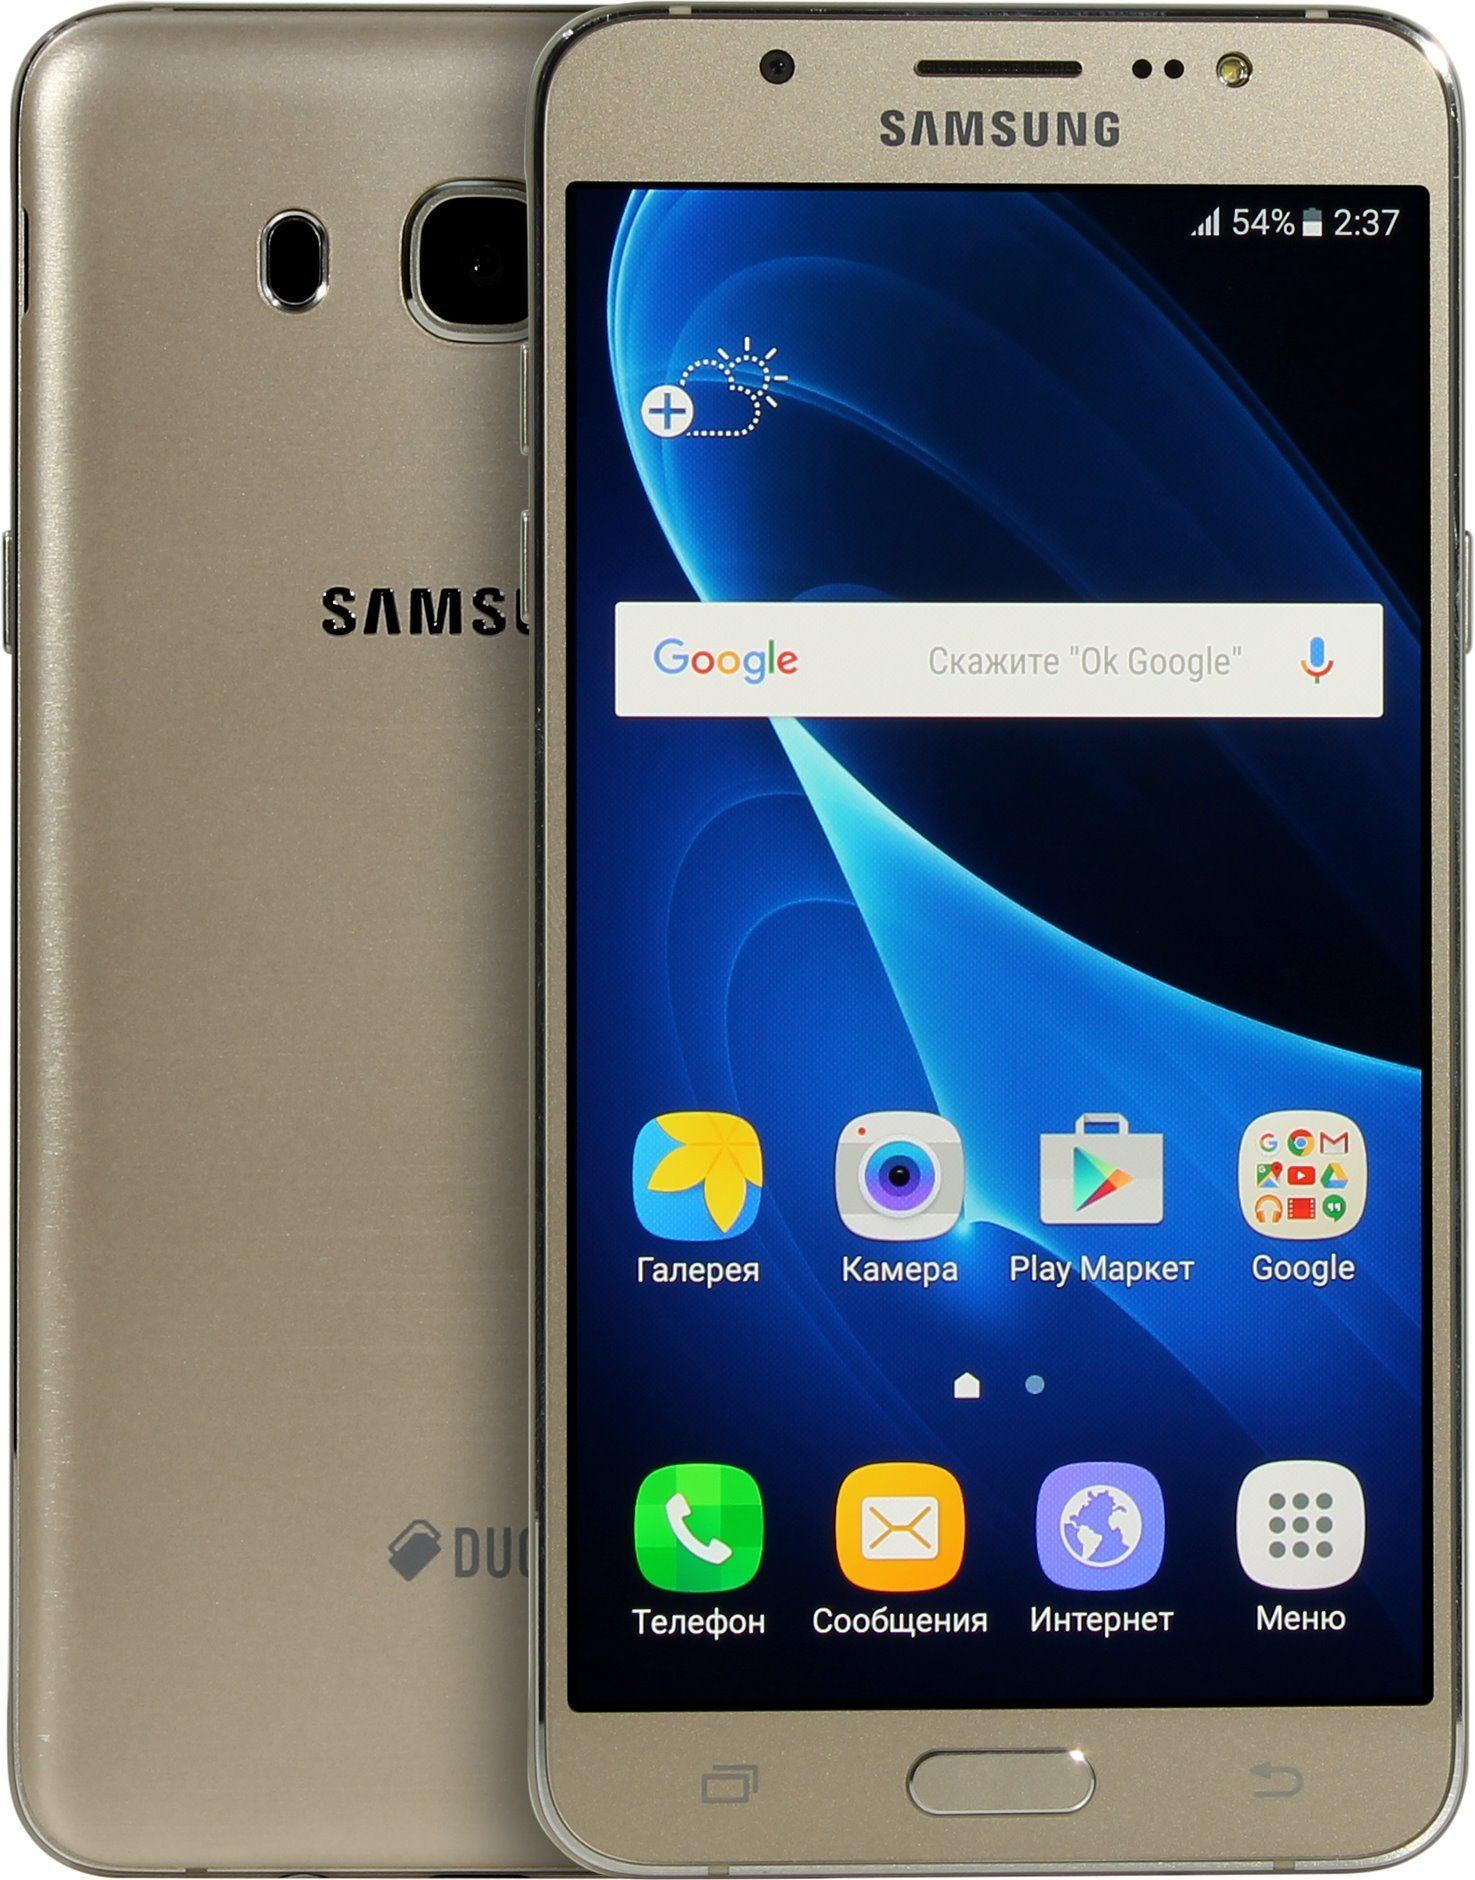 Самсунг j7 память. Samsung Galaxy j7 2016. Samsung Galaxy j710. Samsung SM-j710f. Смартфон Samsung Galaxy j7 (2016).